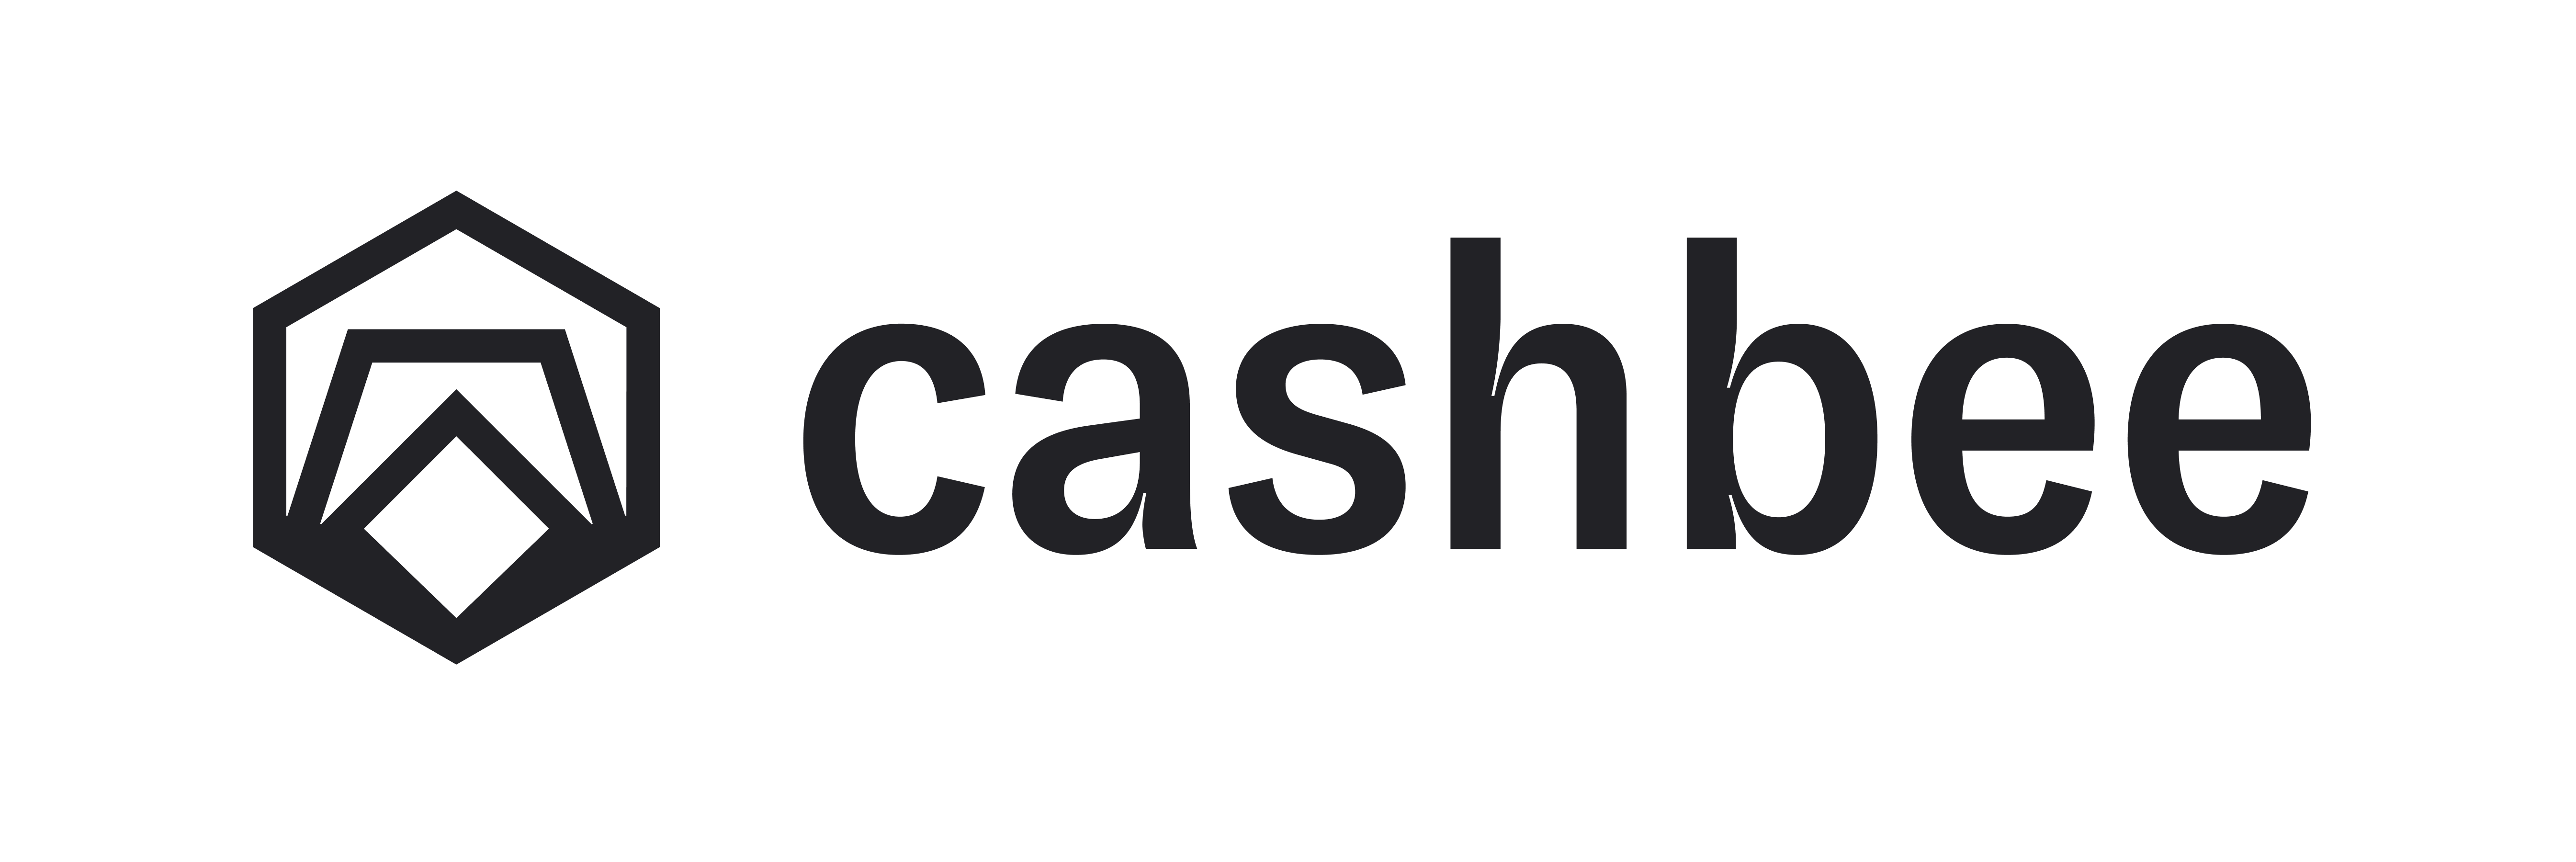 Cashbee logo